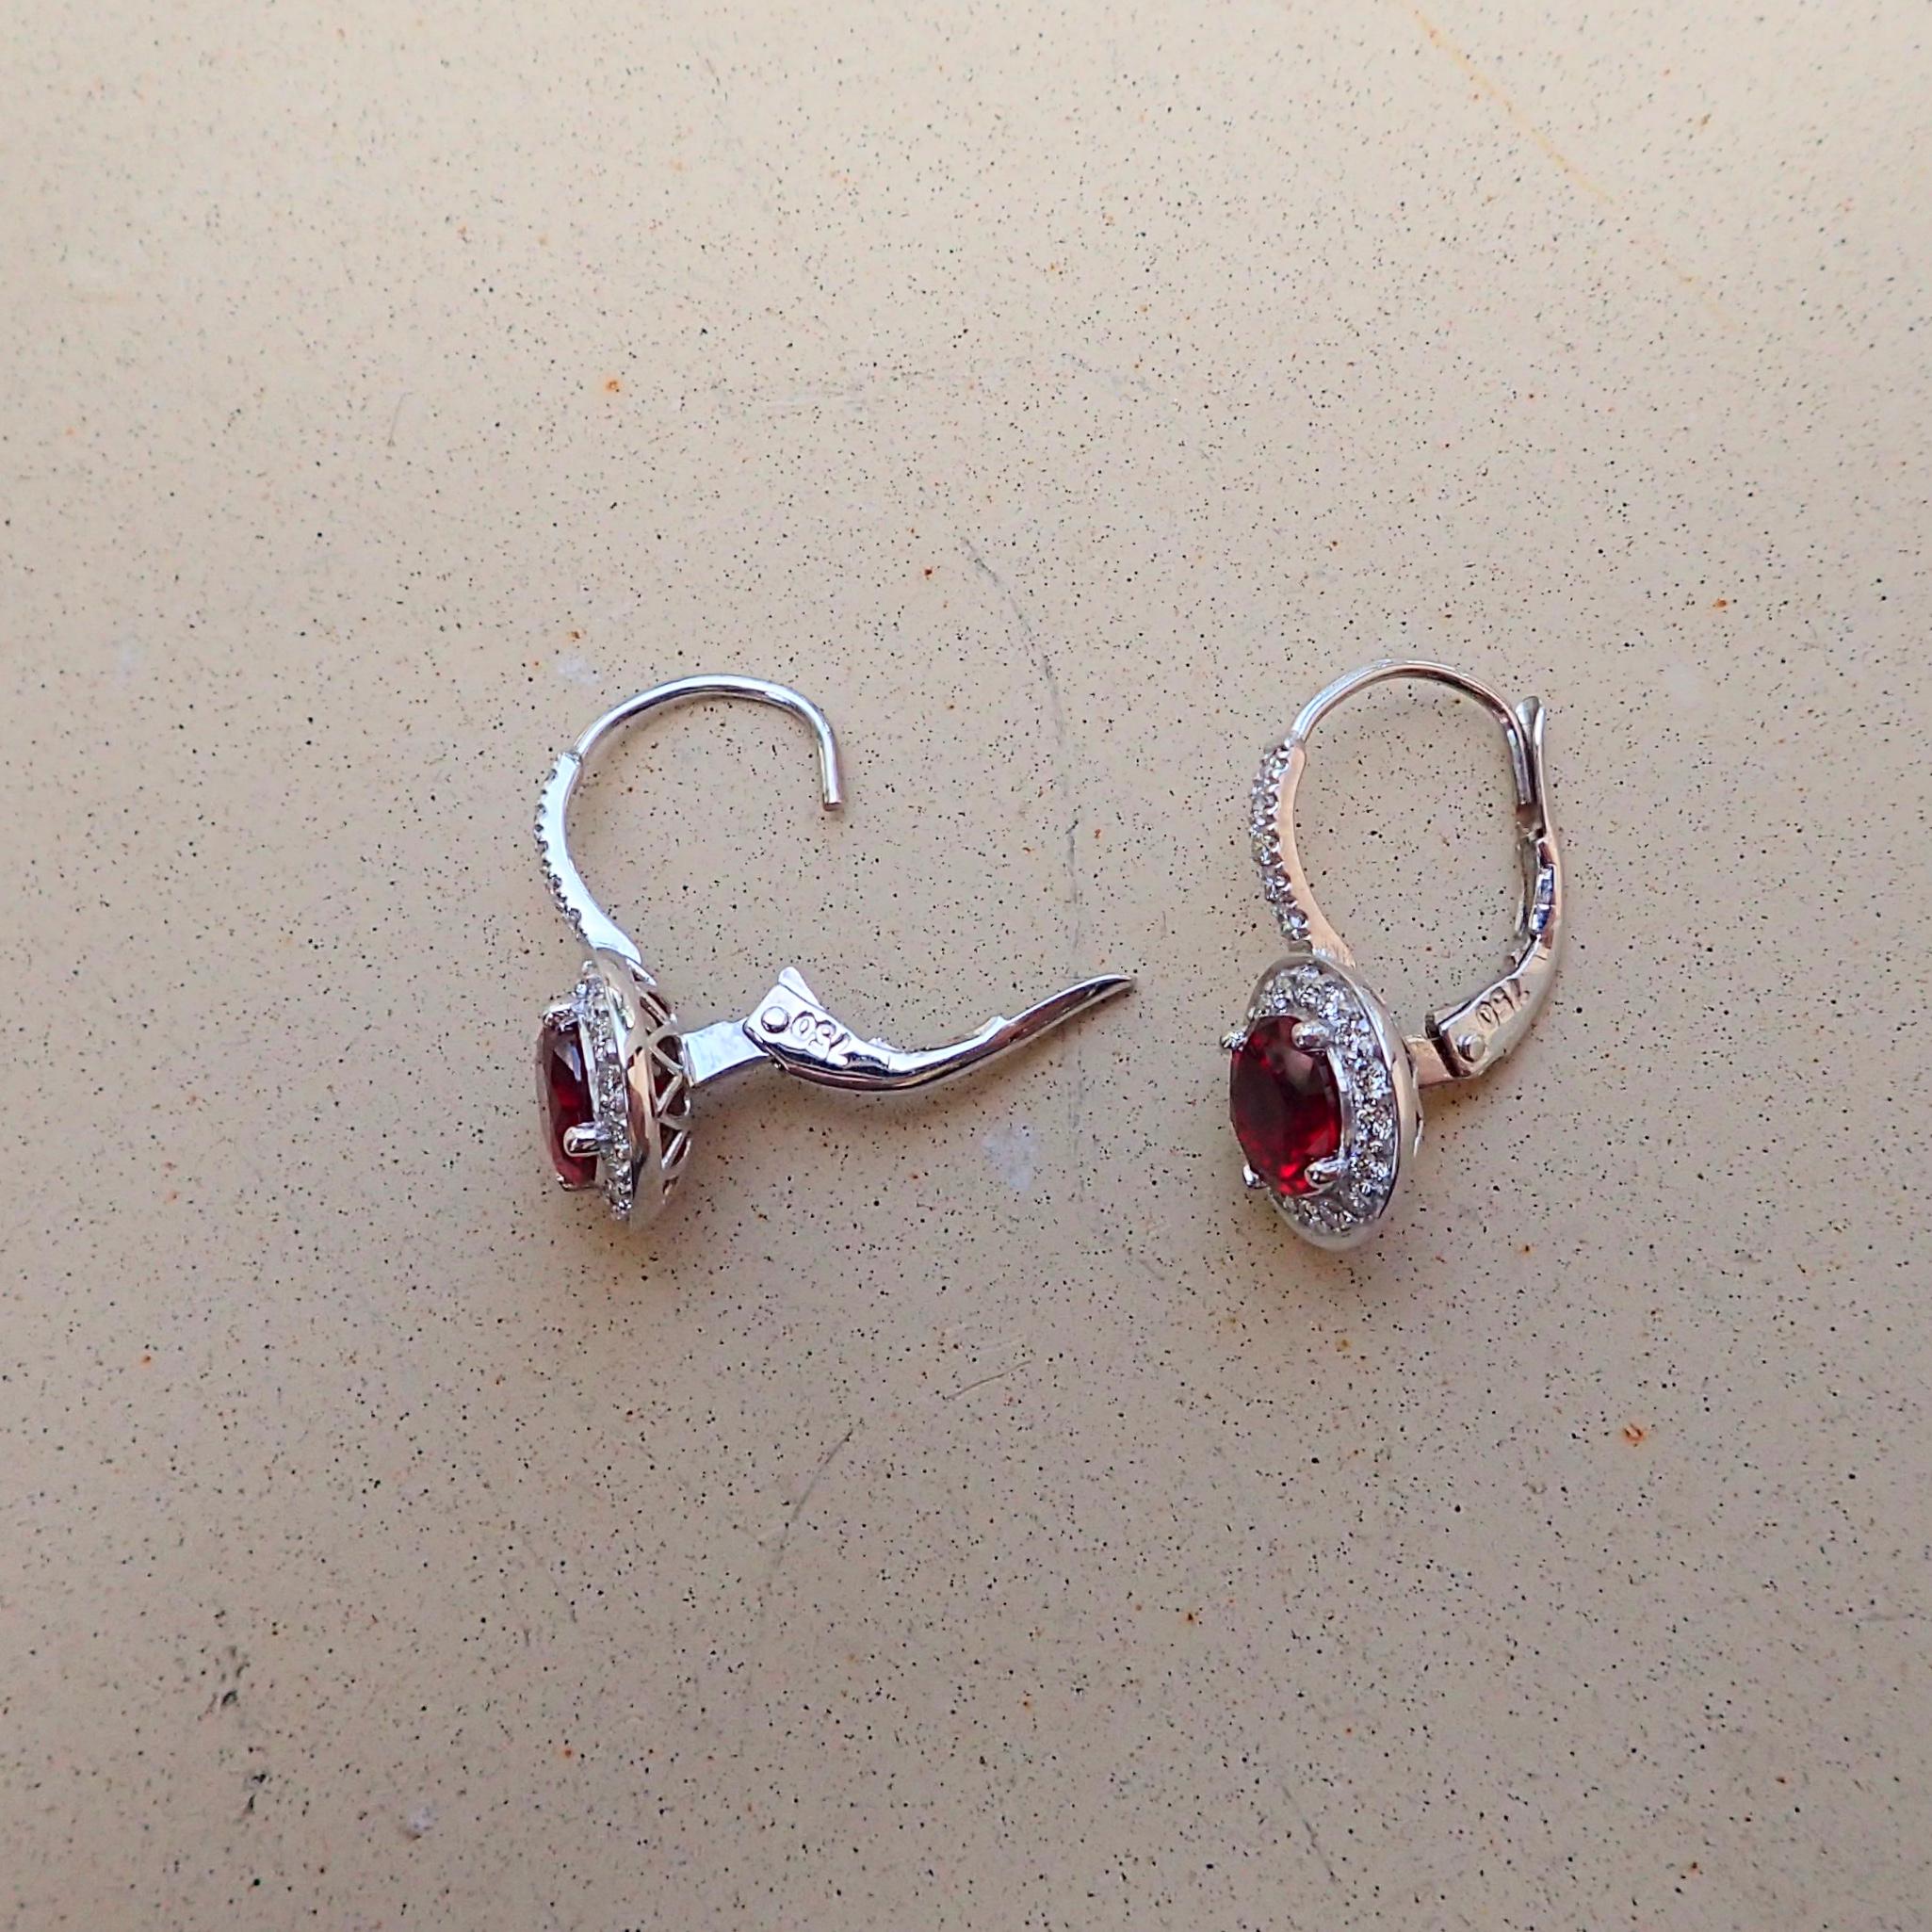 Round Cut 18k White Gold Earrings, 2.43 Carat Chatham-Created Ruby, 0.41 Carat Diamond